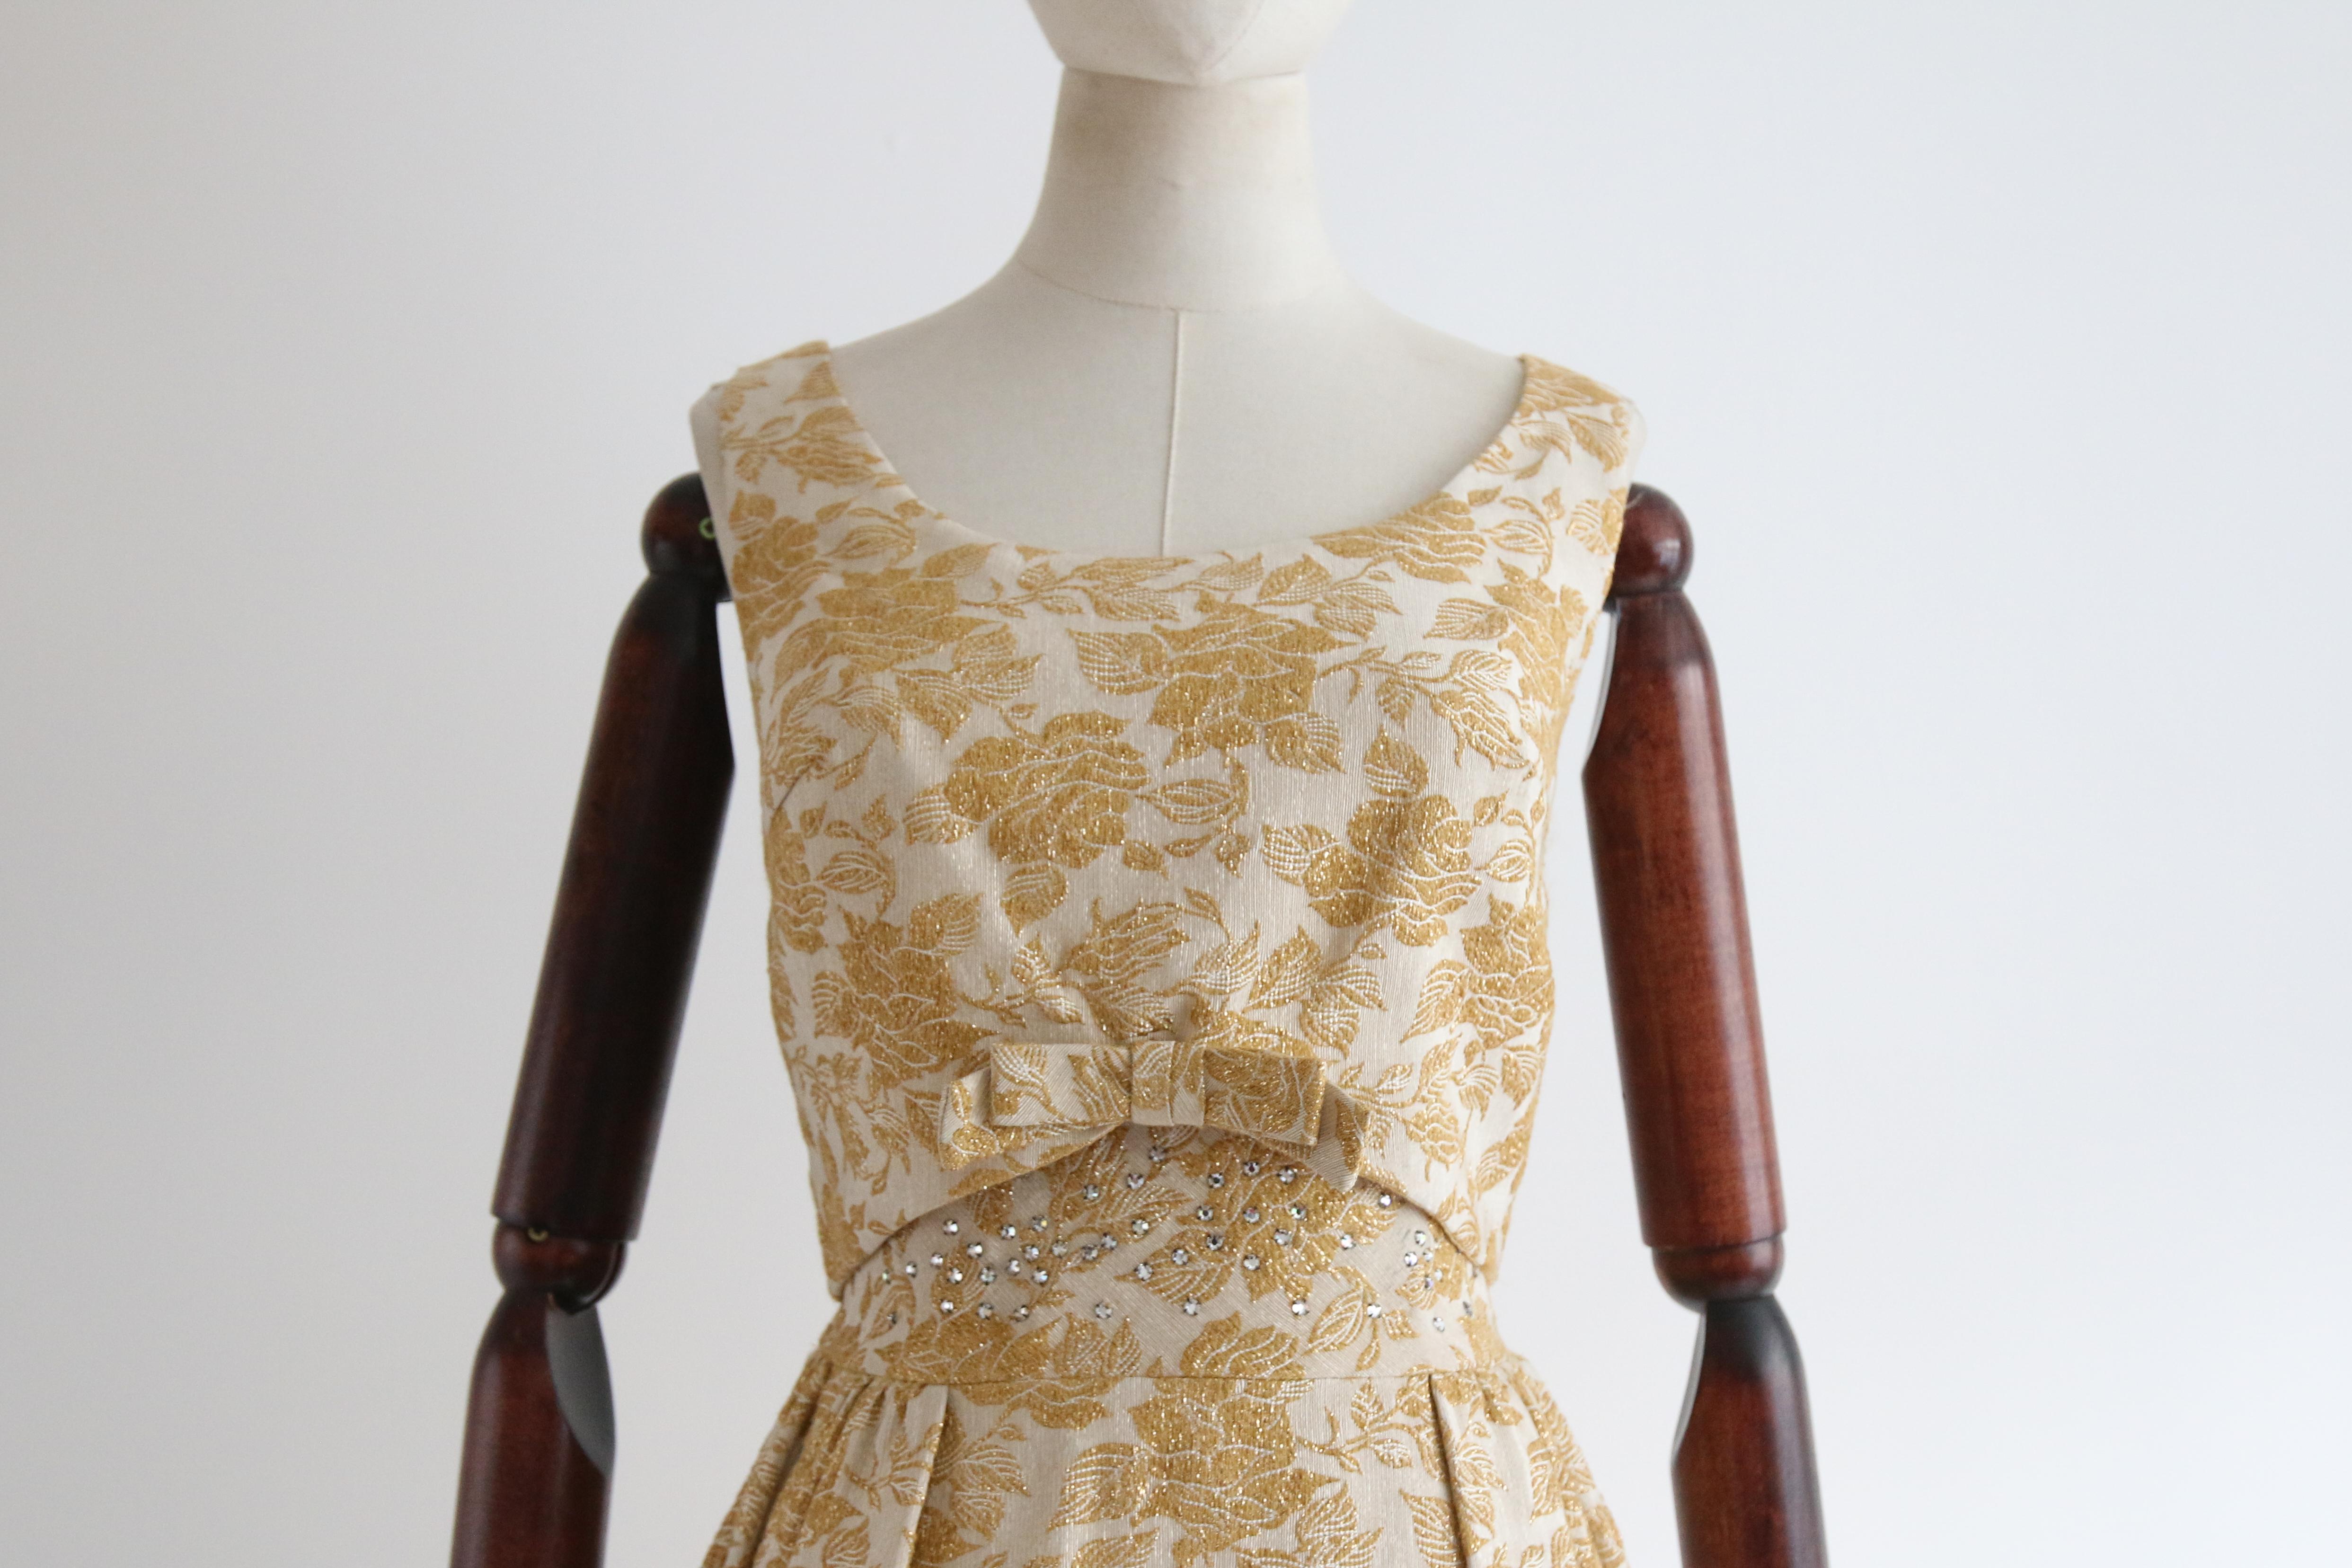  Vintage 1960's Gold Lurex Brocade & Rhinestone Evening Gown UK 8 US 4 In Good Condition For Sale In Cheltenham, GB